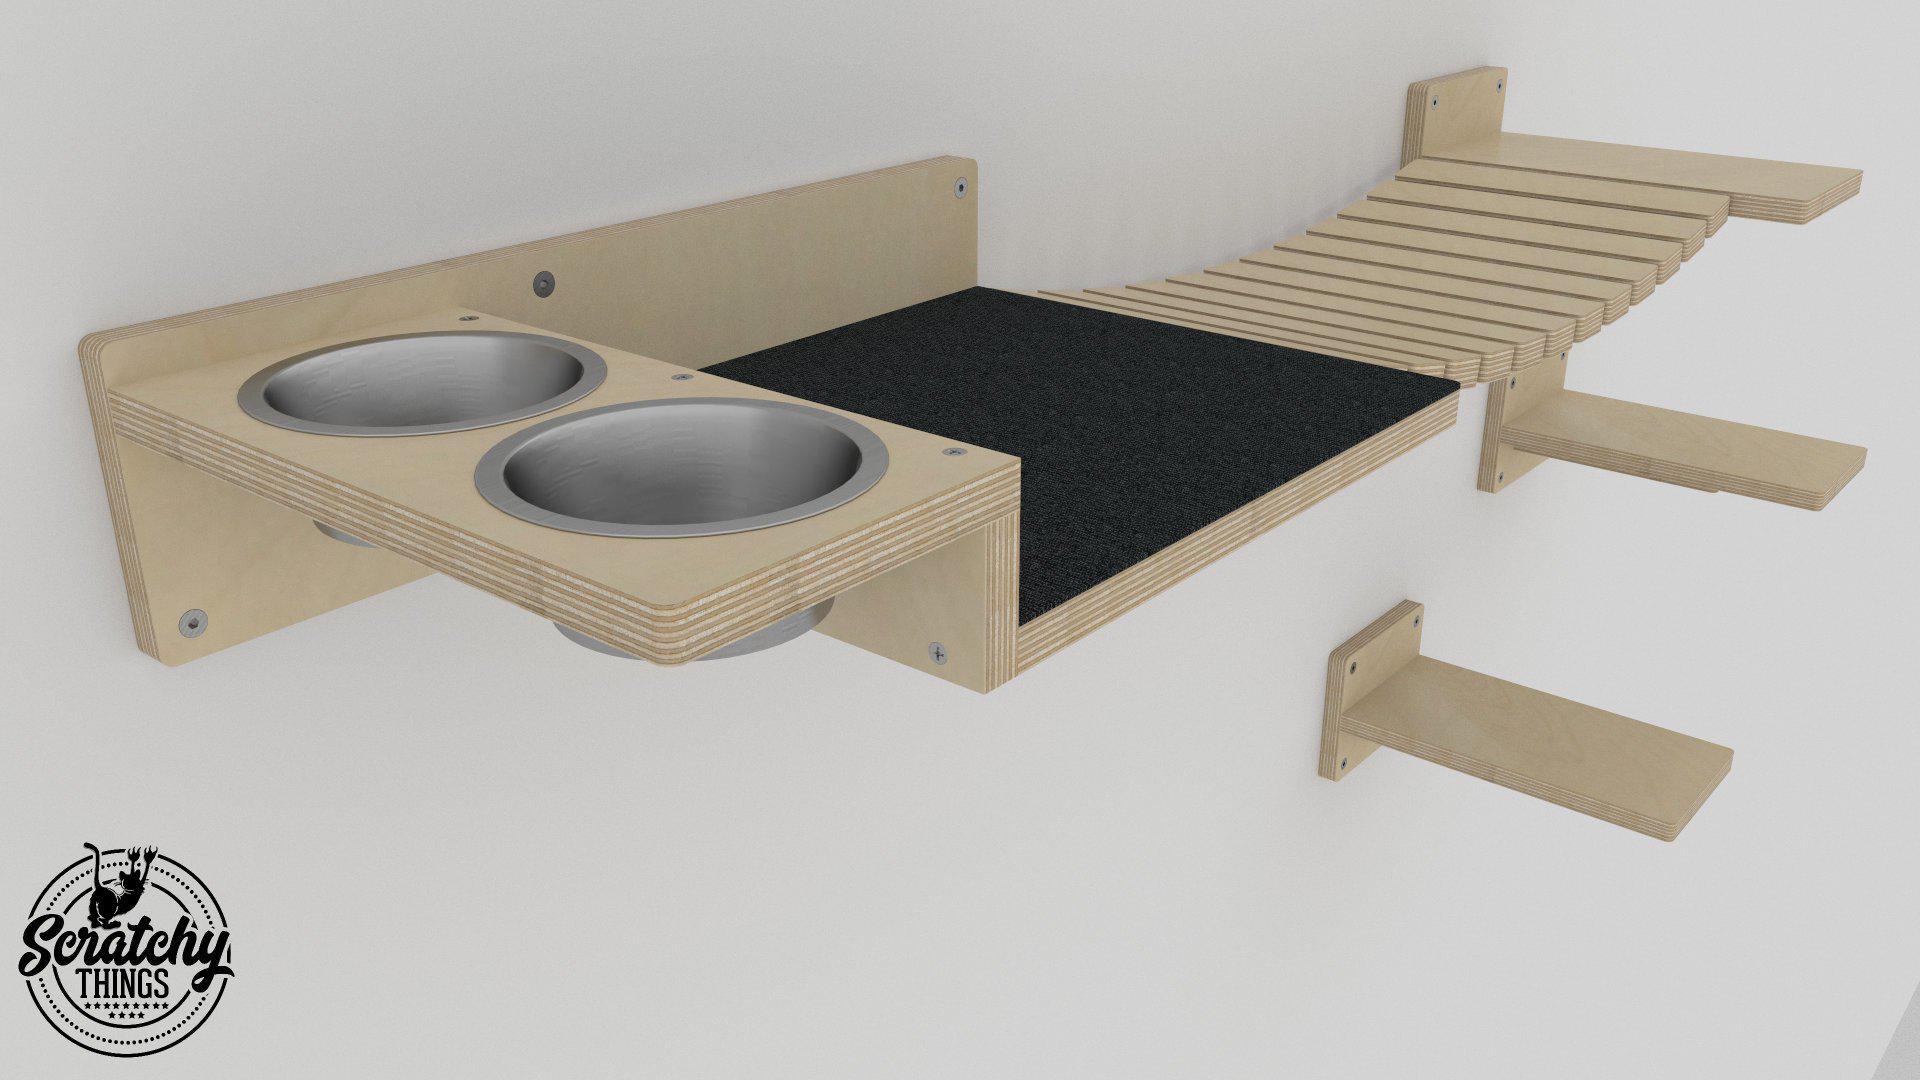 Cat Wall Shelf Step Bridge Feeder Bundle - Wally Starter Bundle - Scratchy Things Premium Pet Furniture